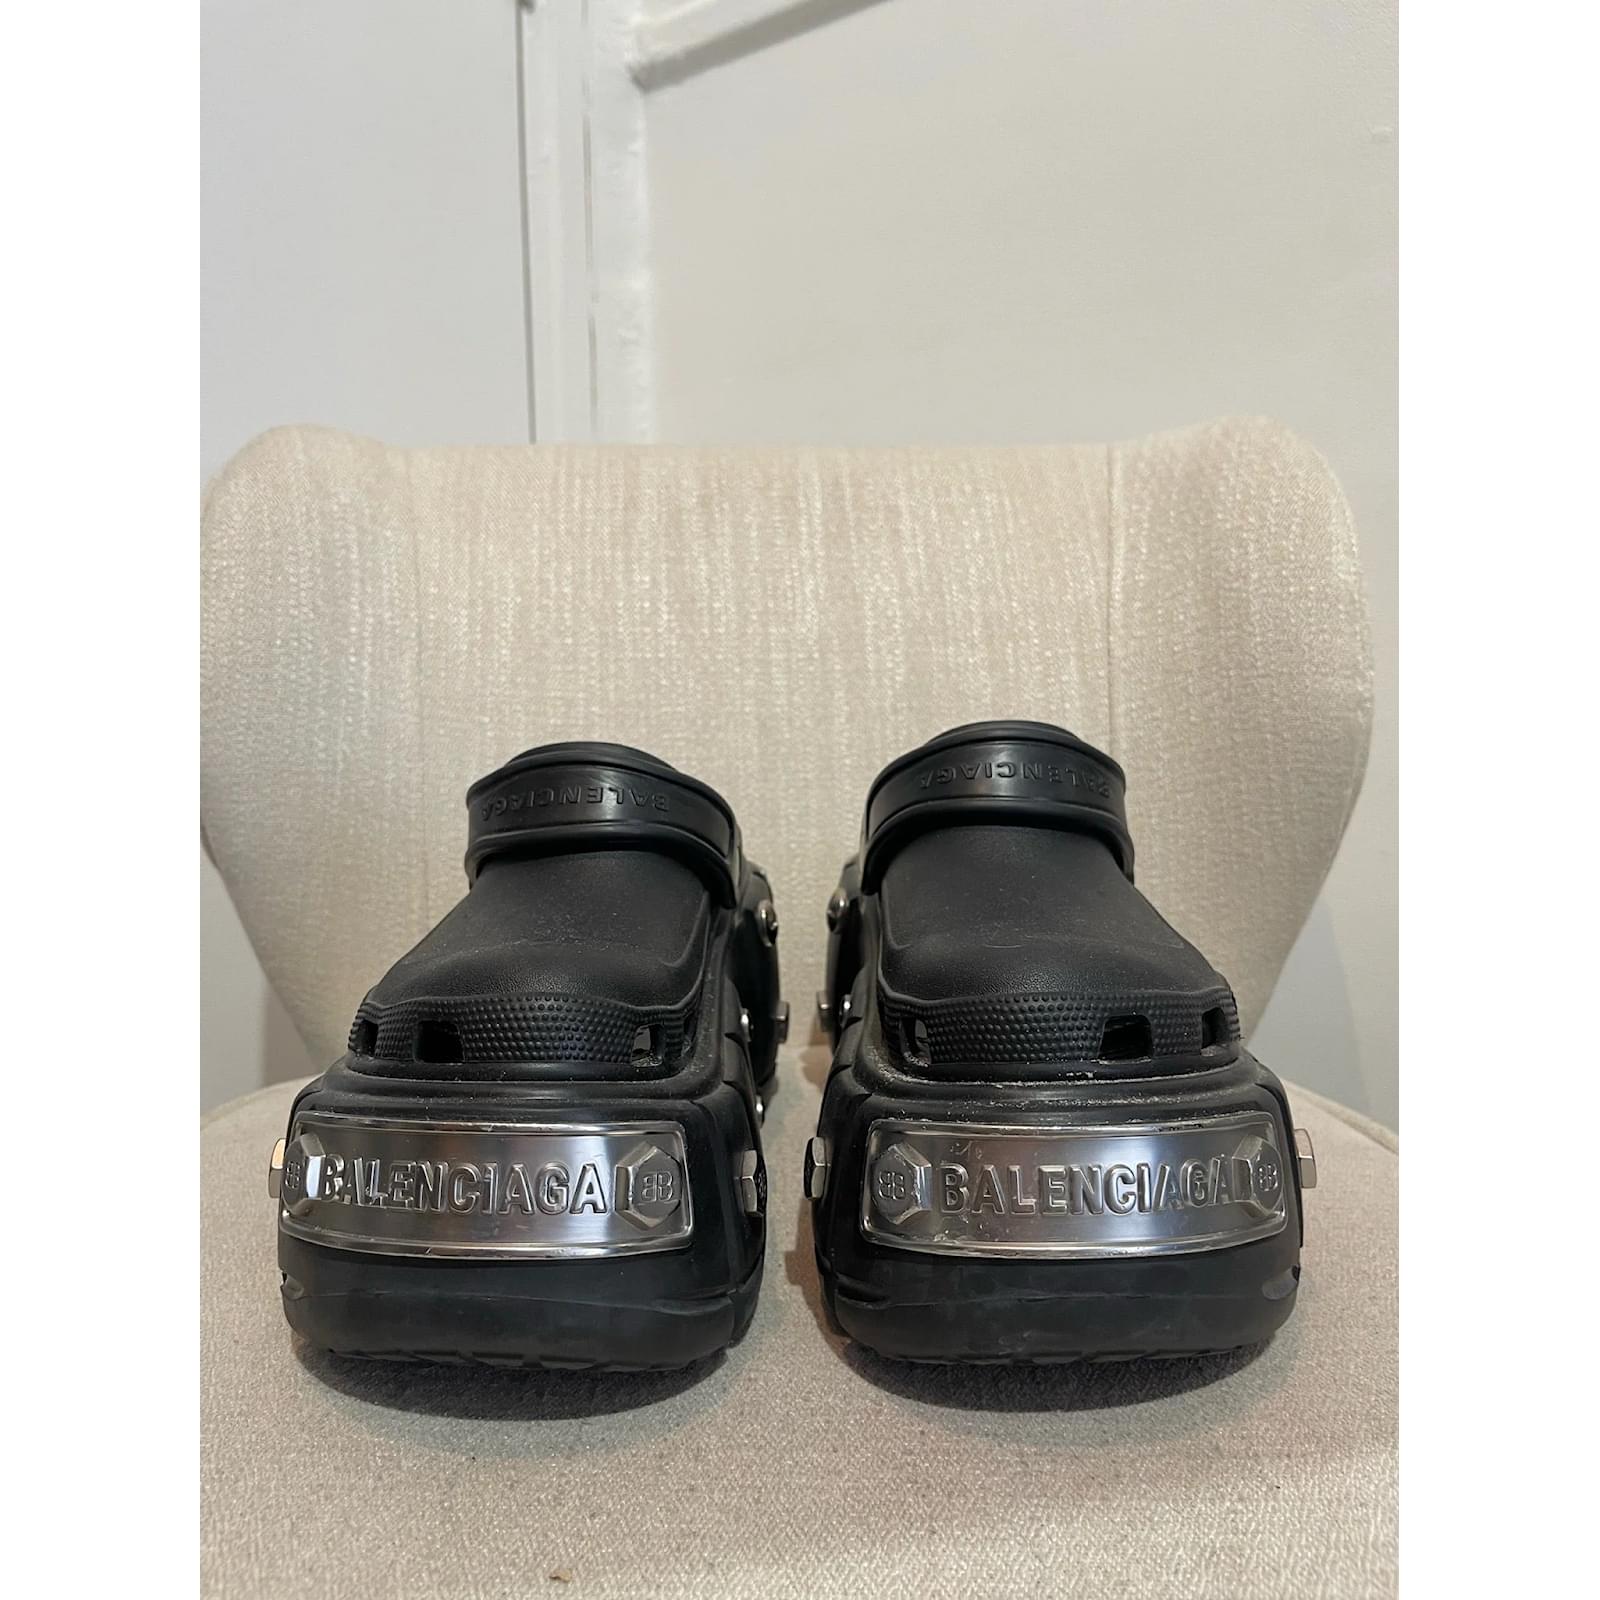 Balenciaga Pantaleggings in Black Polyamide leggings 38/37 Shoe chunky heel